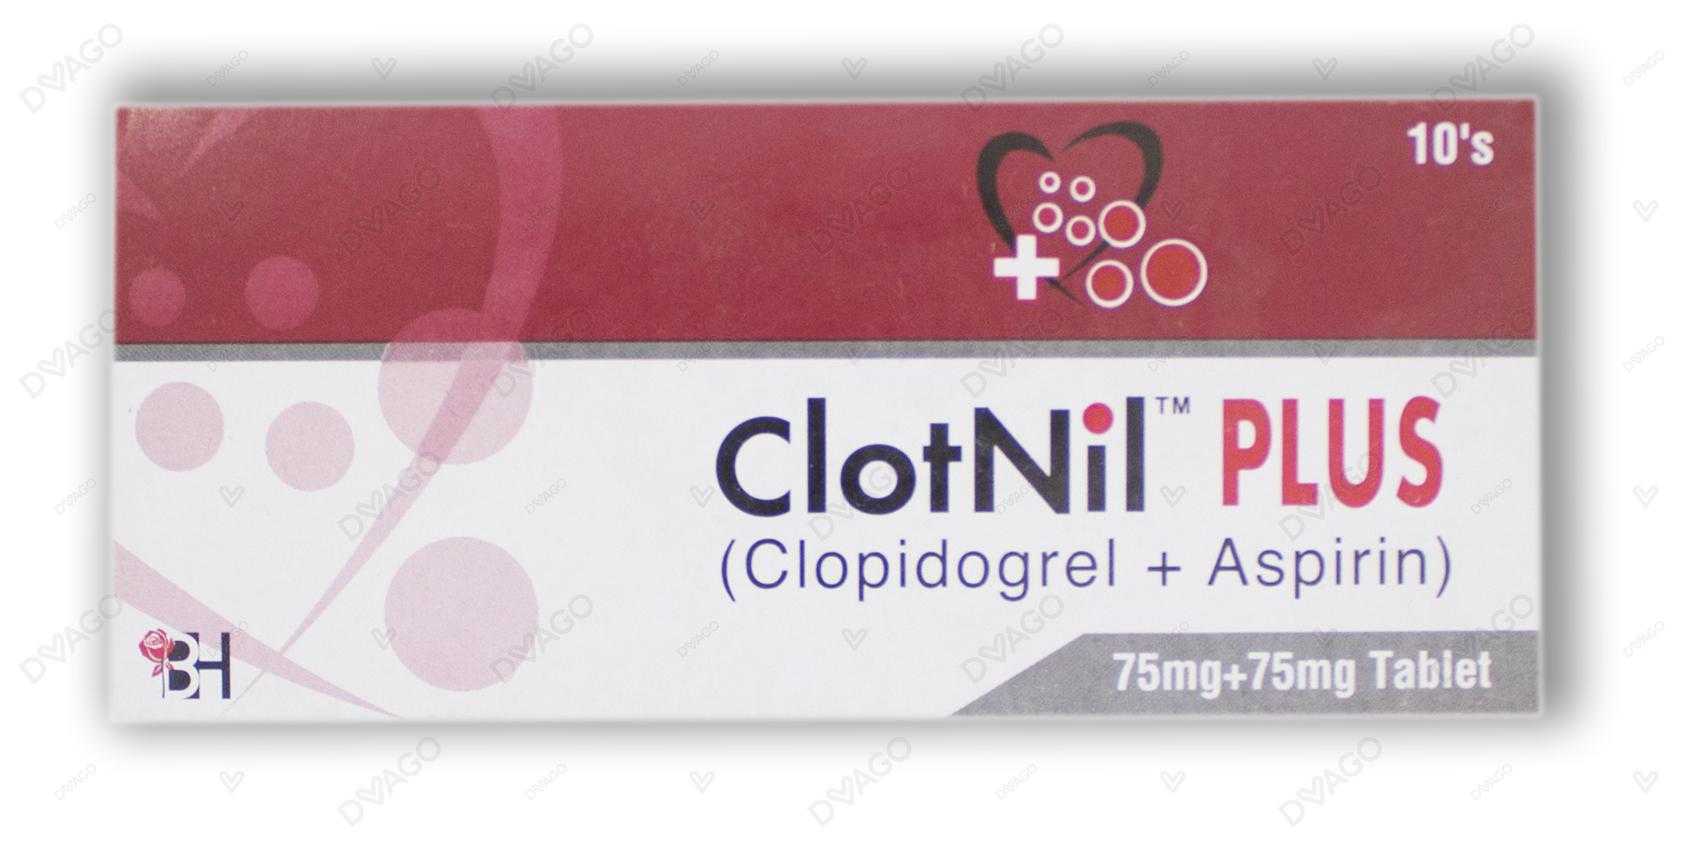 clotnil plus tablets 75+75mg